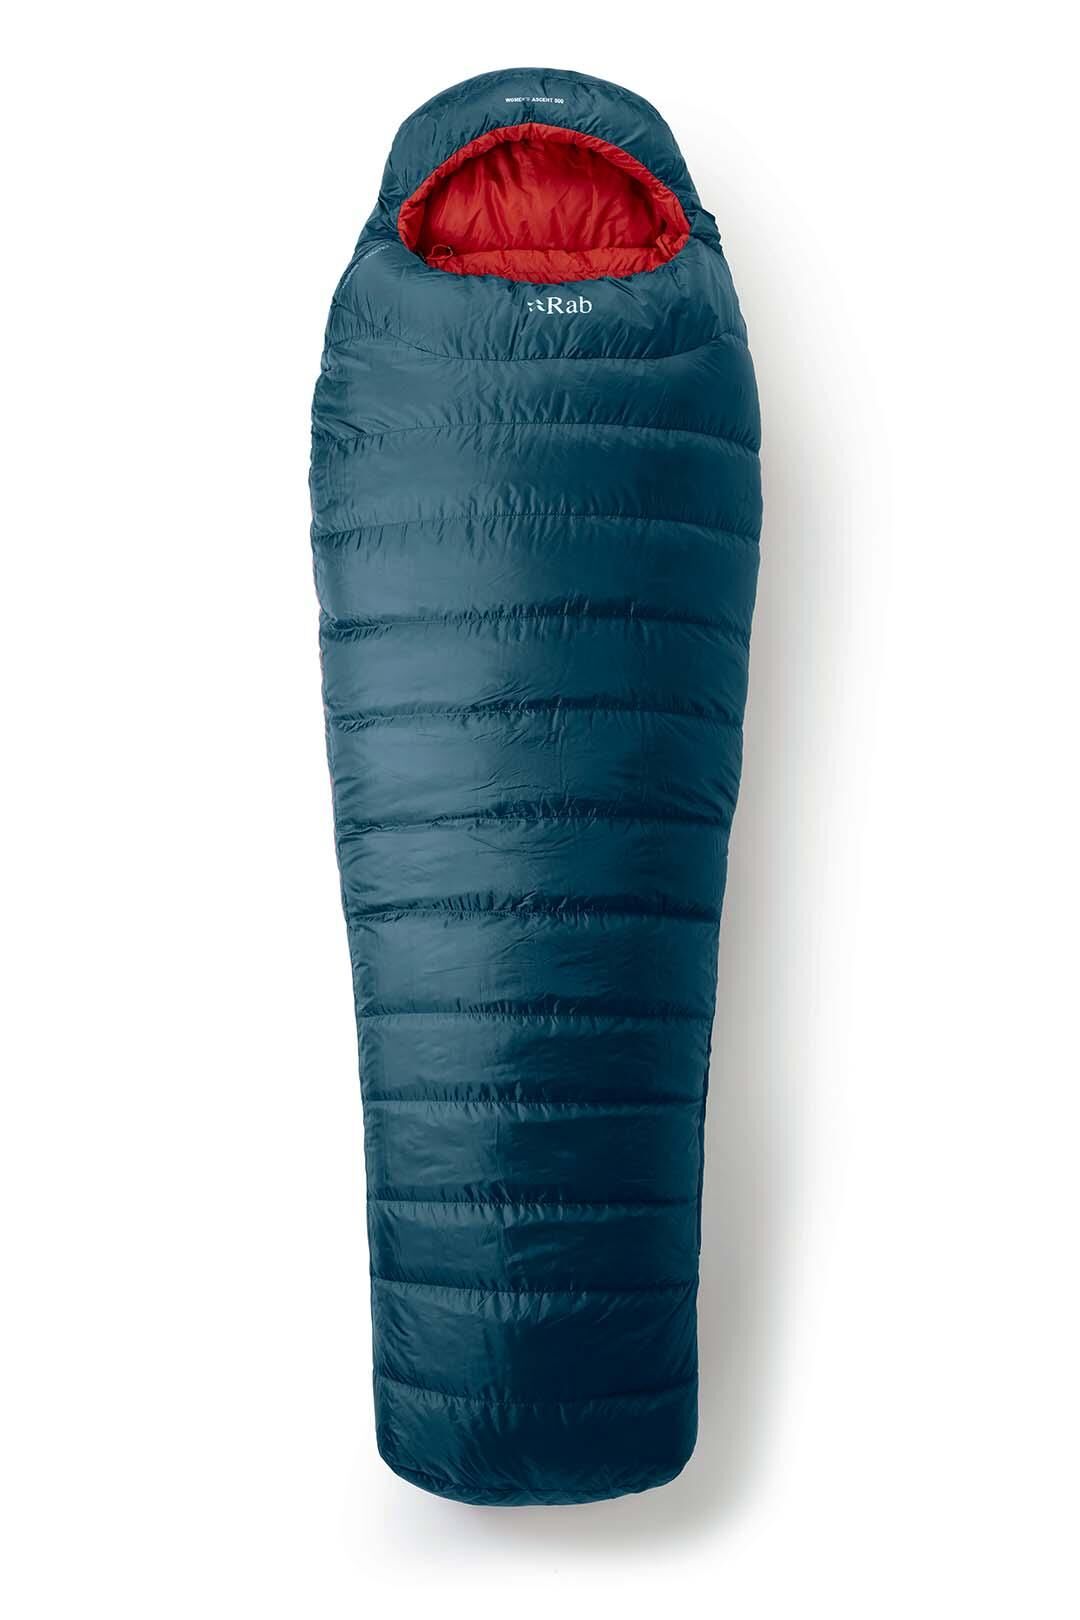 Rab - Ascent 500 - Down sleeping bag - Women's